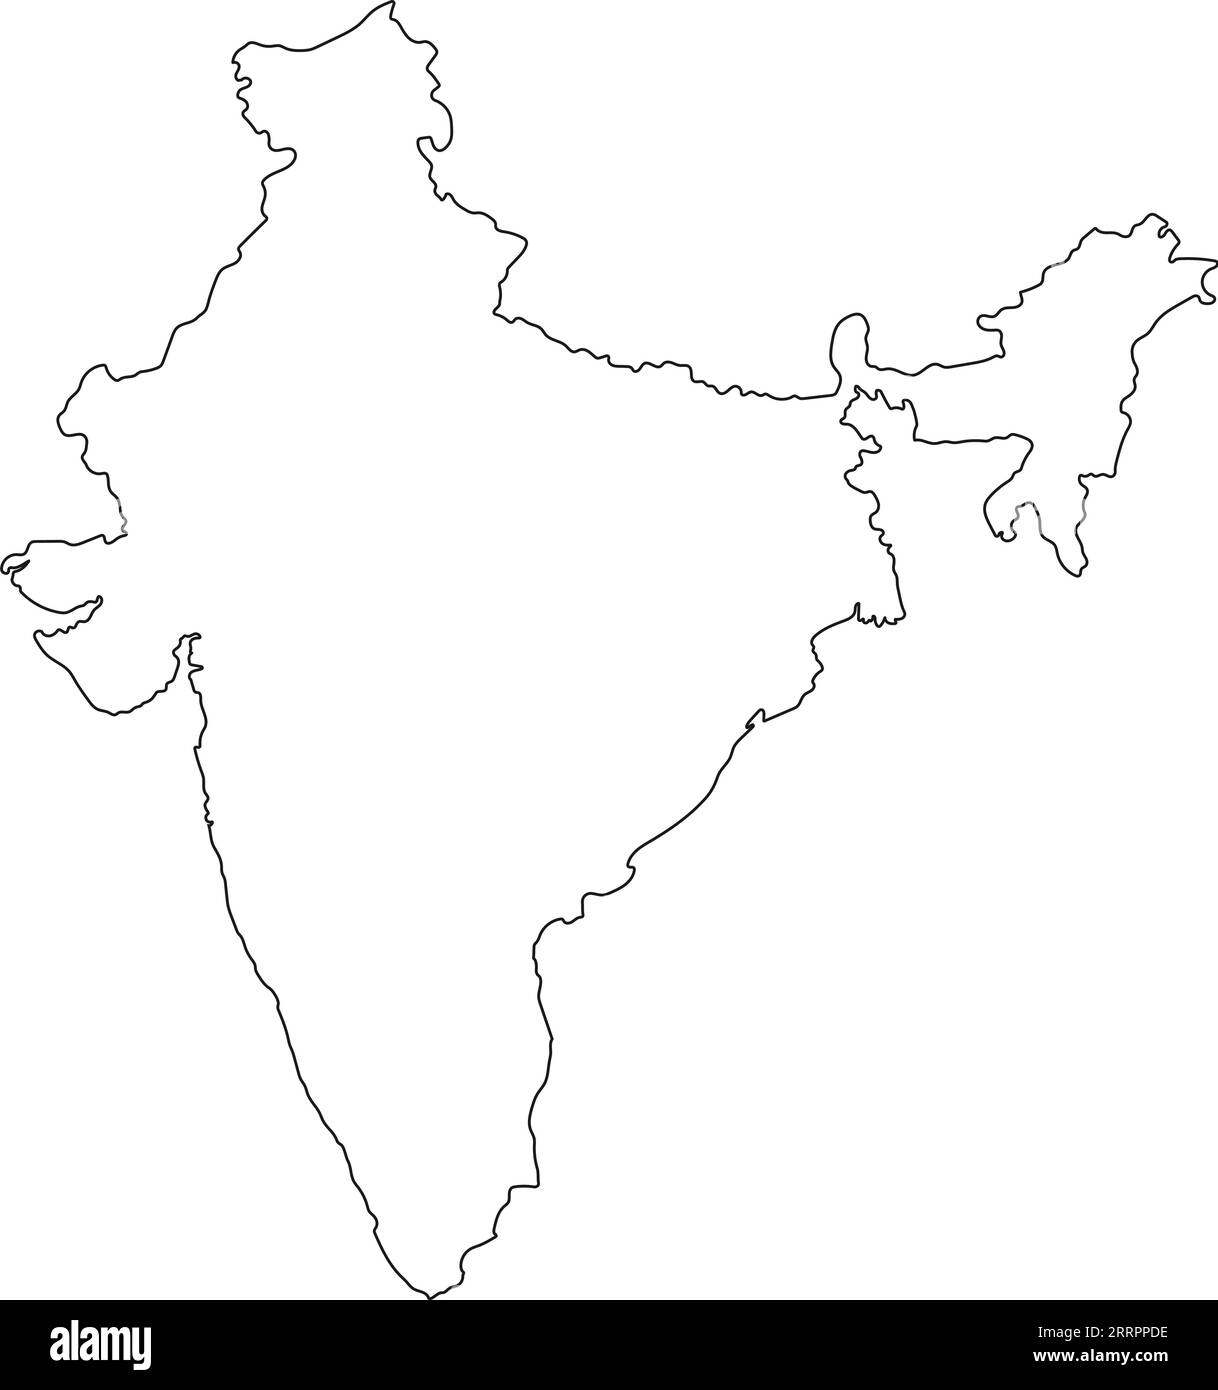 india map icon vector illustration design Stock Vector